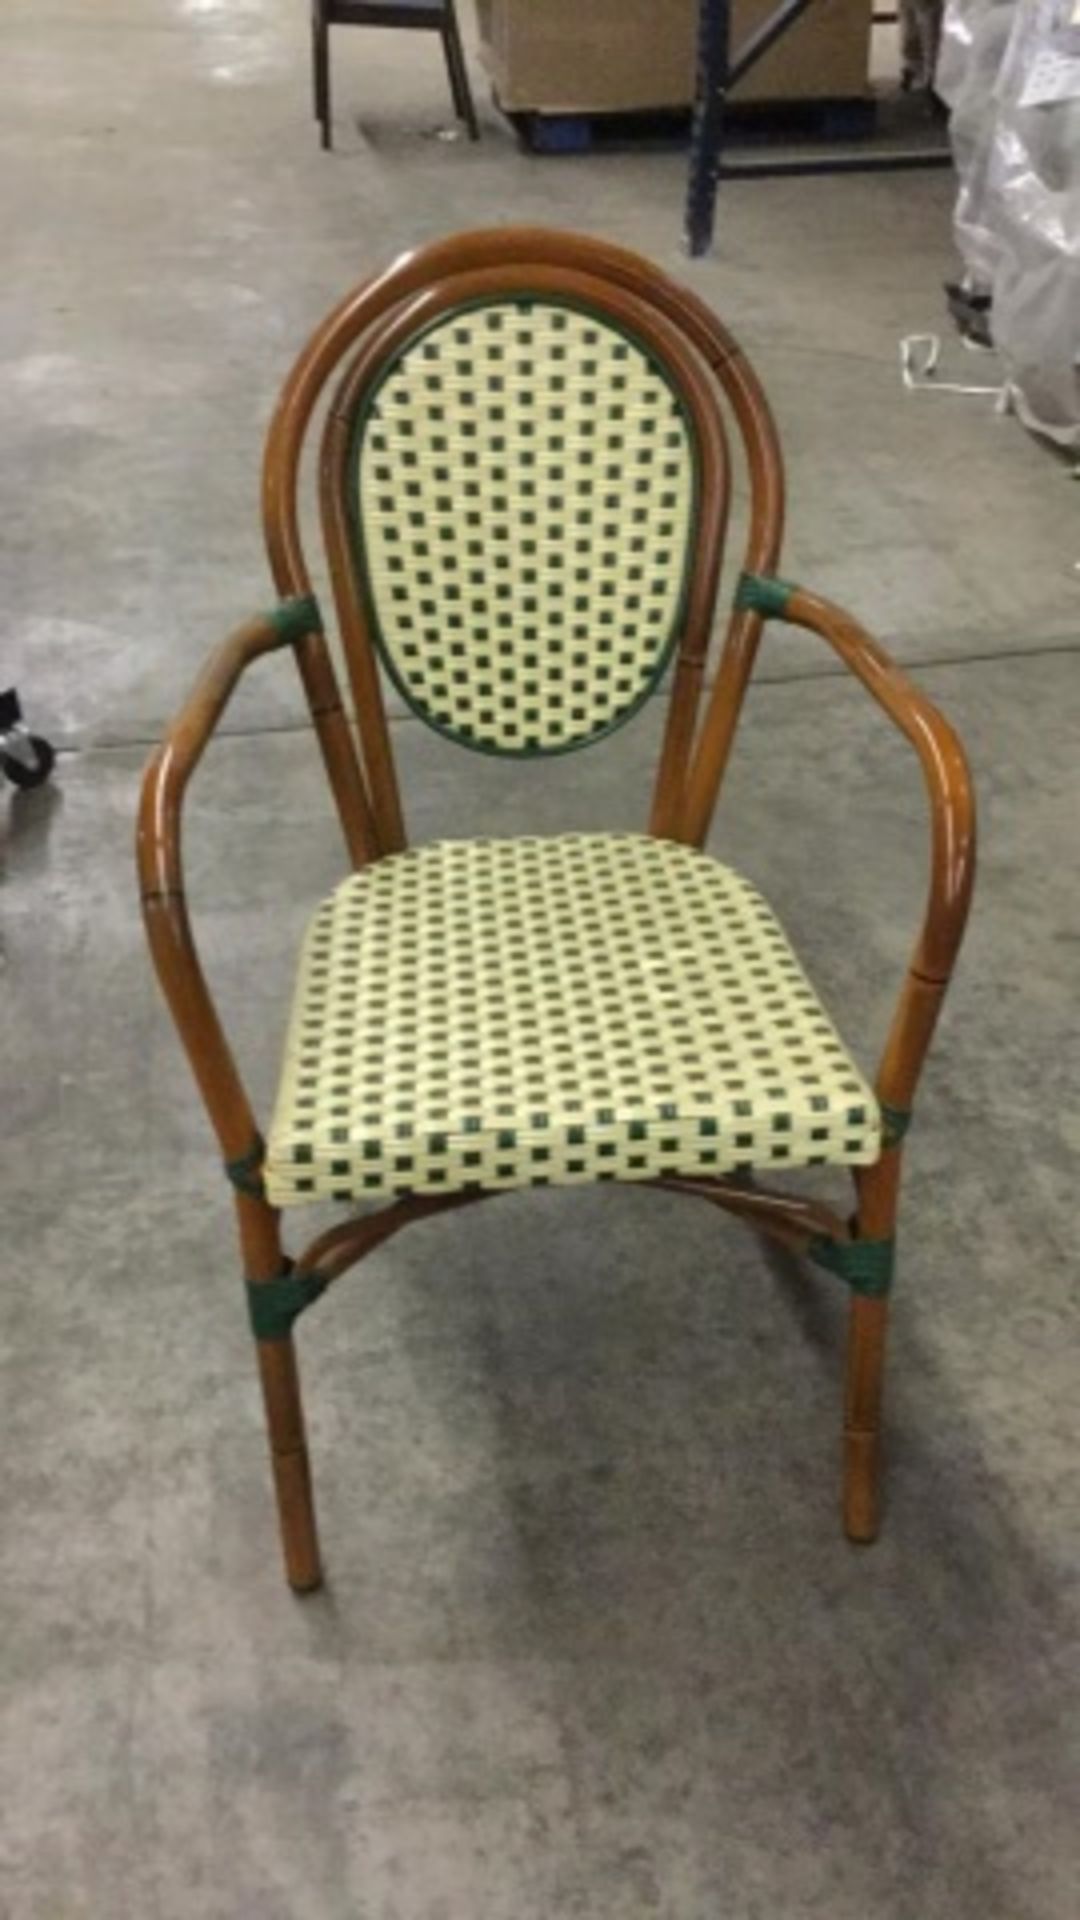 Parisienne Arm Chair - Ivory/Green. A57-AC-IG, PE Weave on Tubular Aluminum Frame/Powder coat finish - Image 3 of 7